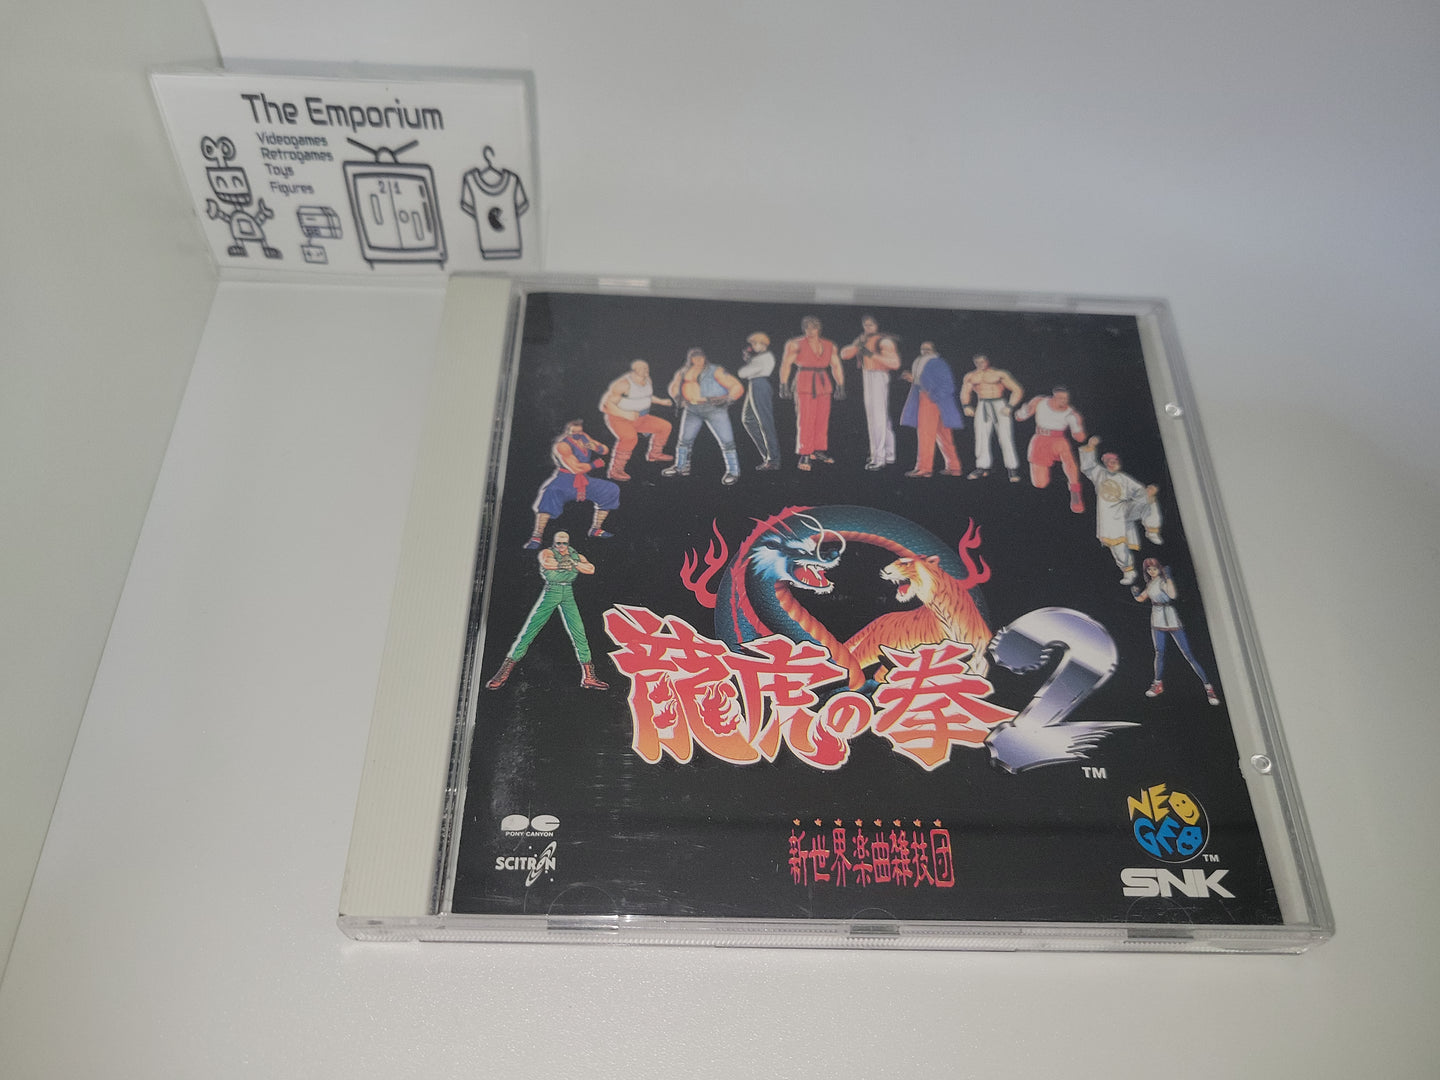 Ryuuko no Ken 2 - Music cd soundtrack